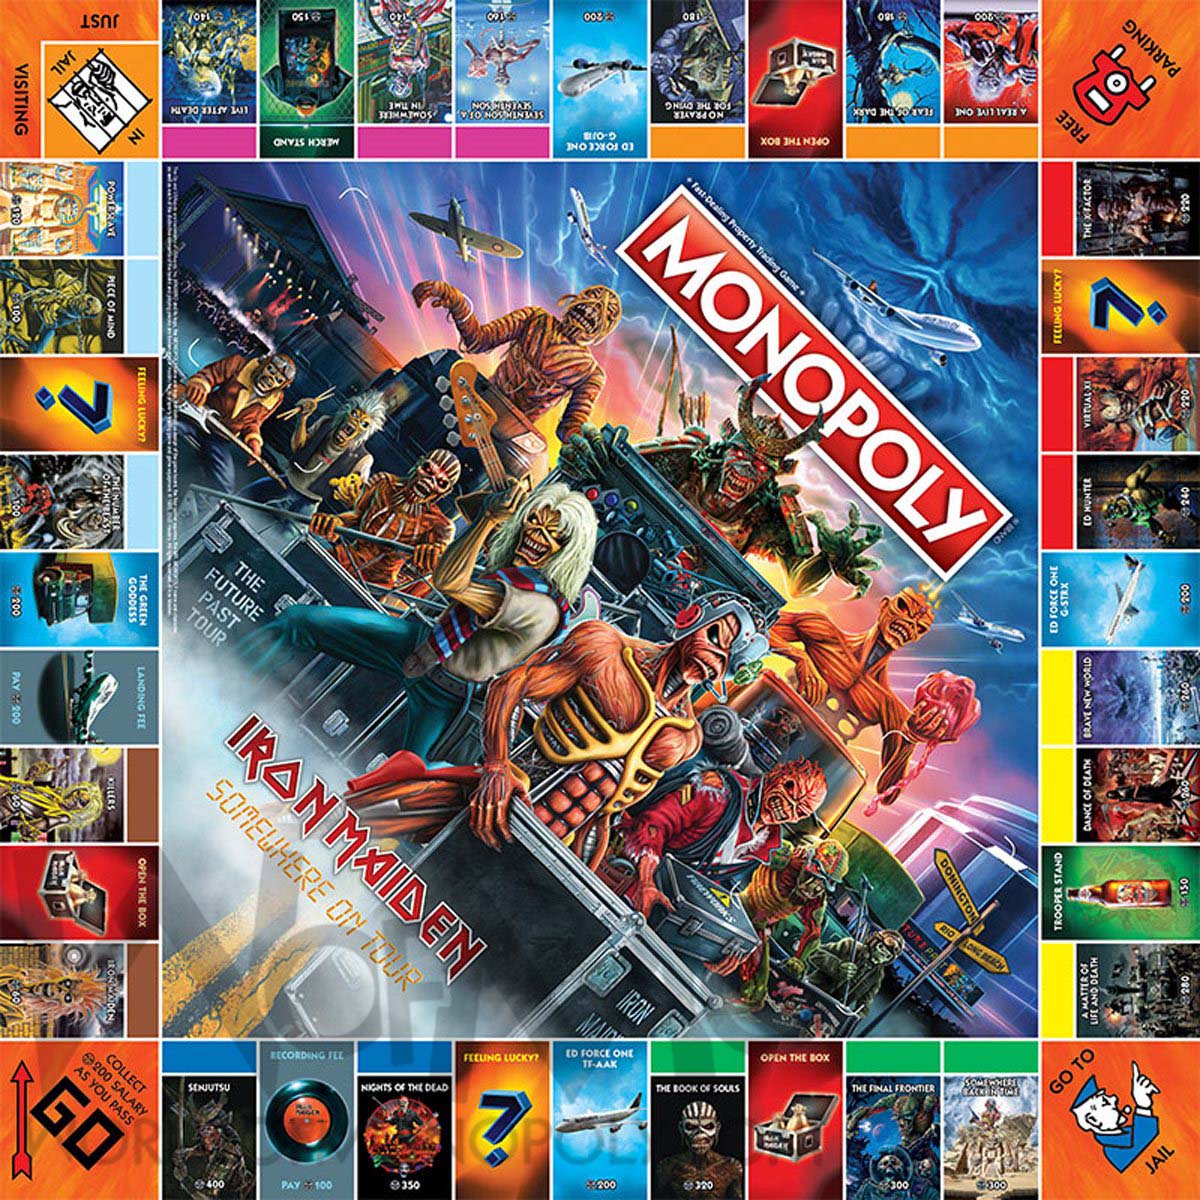 monopoly - iron maiden pic 2